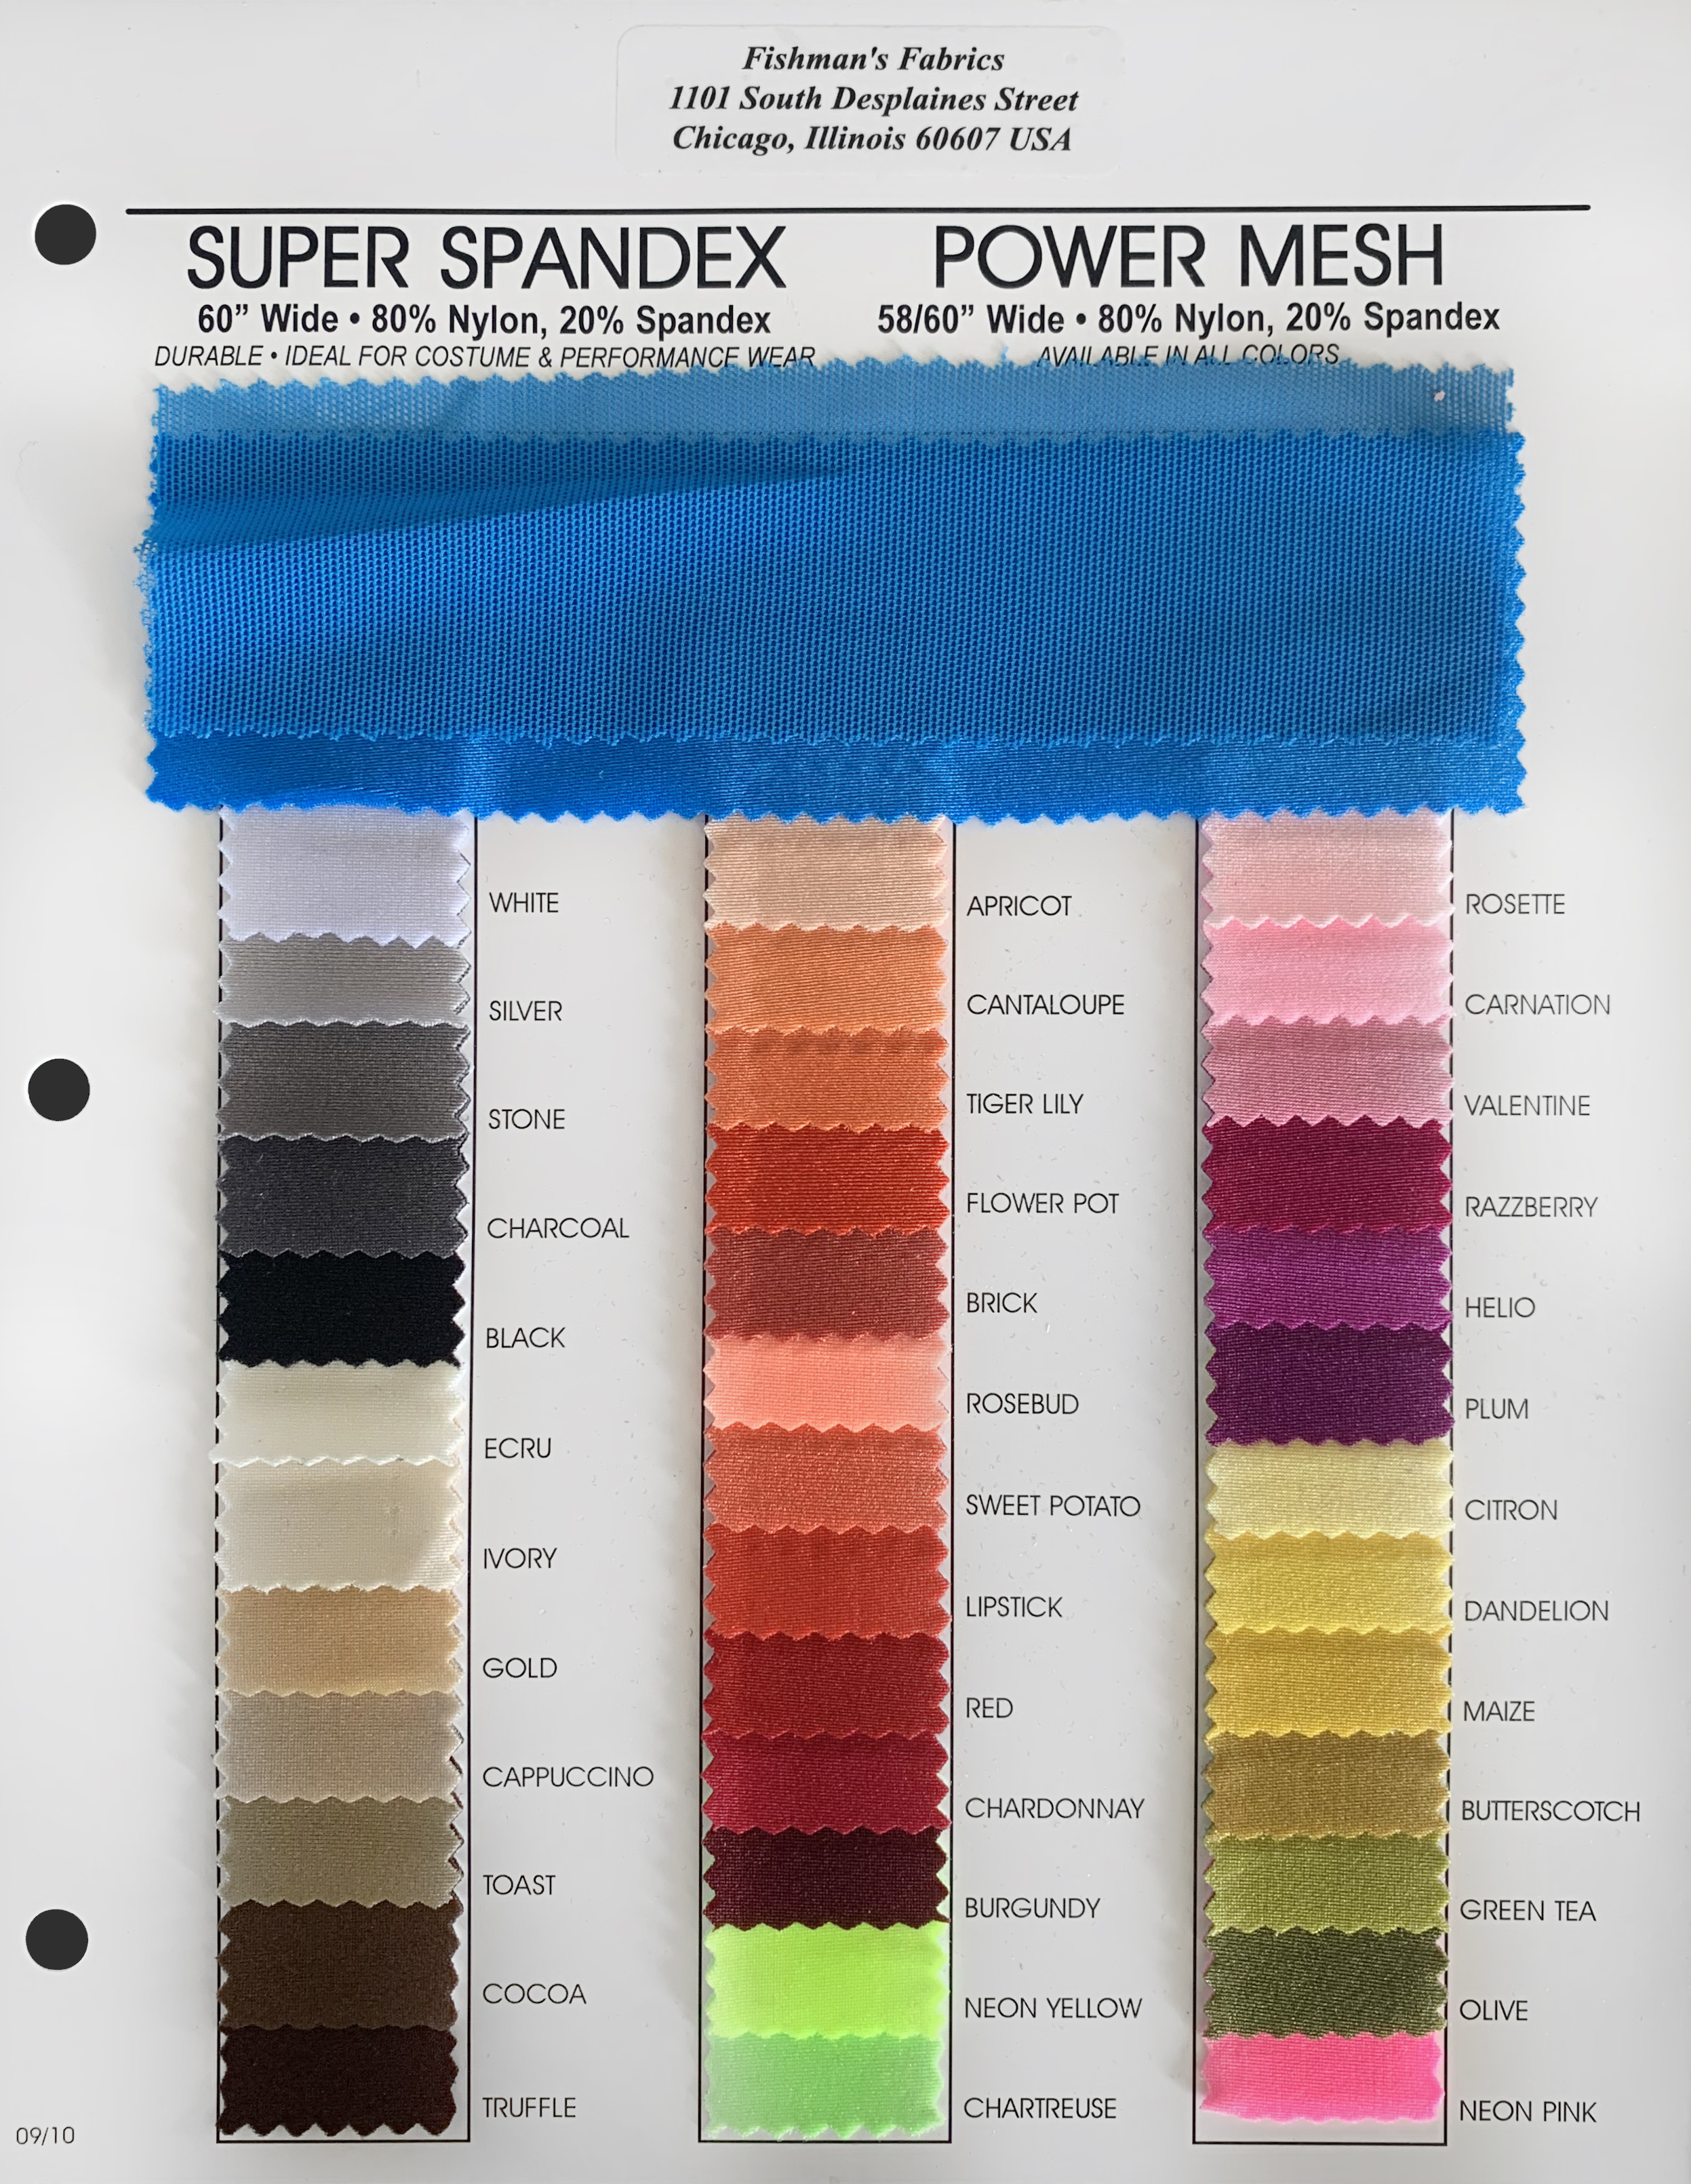 Super Spandex (39 colors) - Fishman's Fabrics